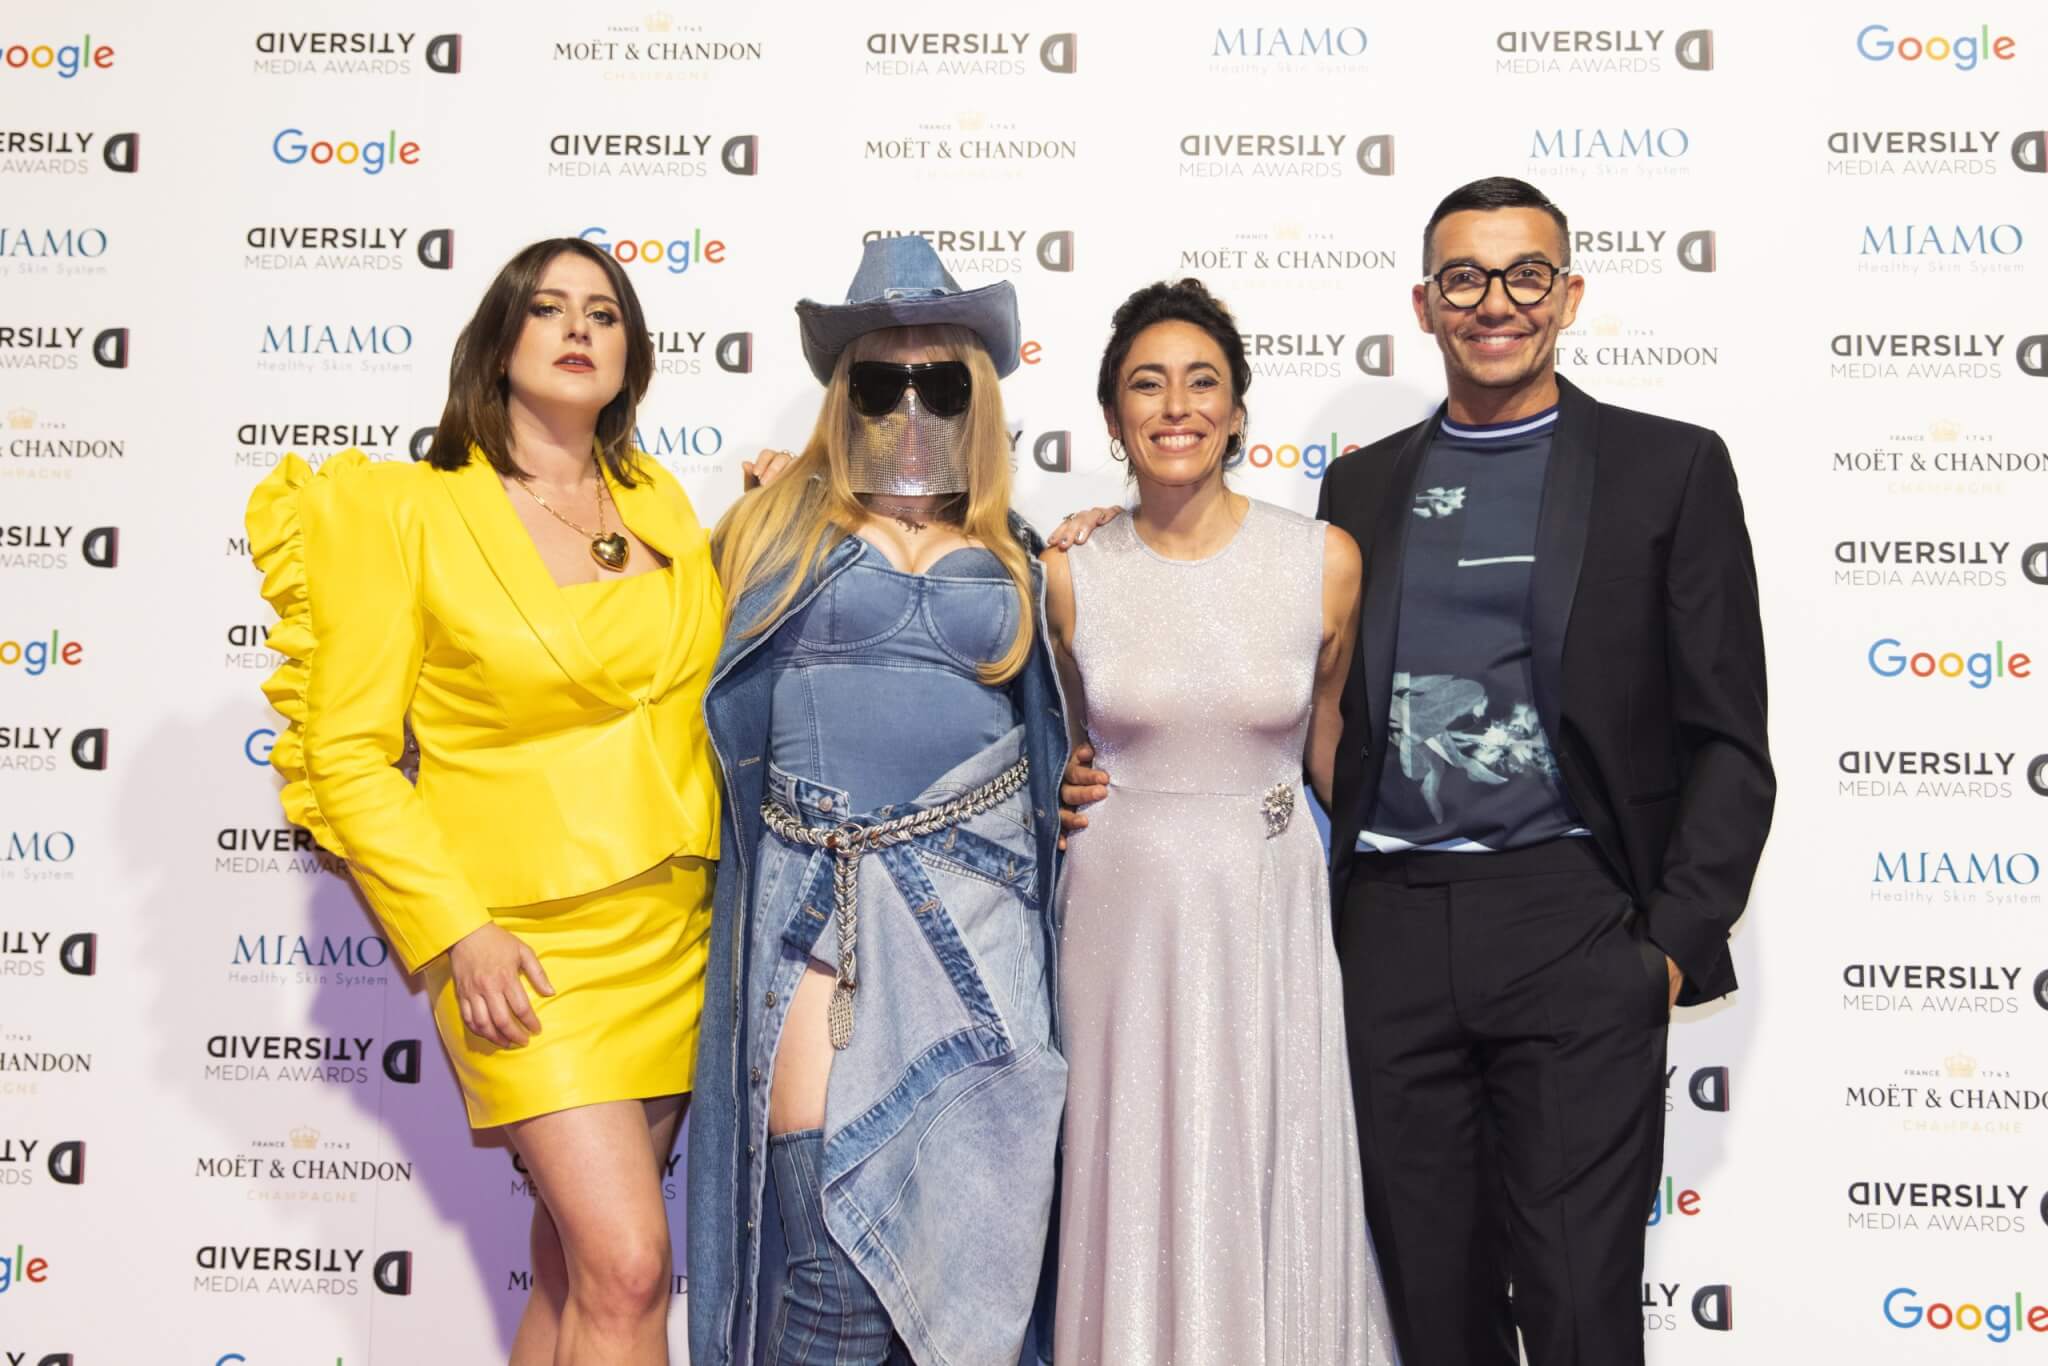 Diversity Media Awards 2022 - Michela Giraud, Miss Keta, Francesca Vecchioni, Diego Passoni